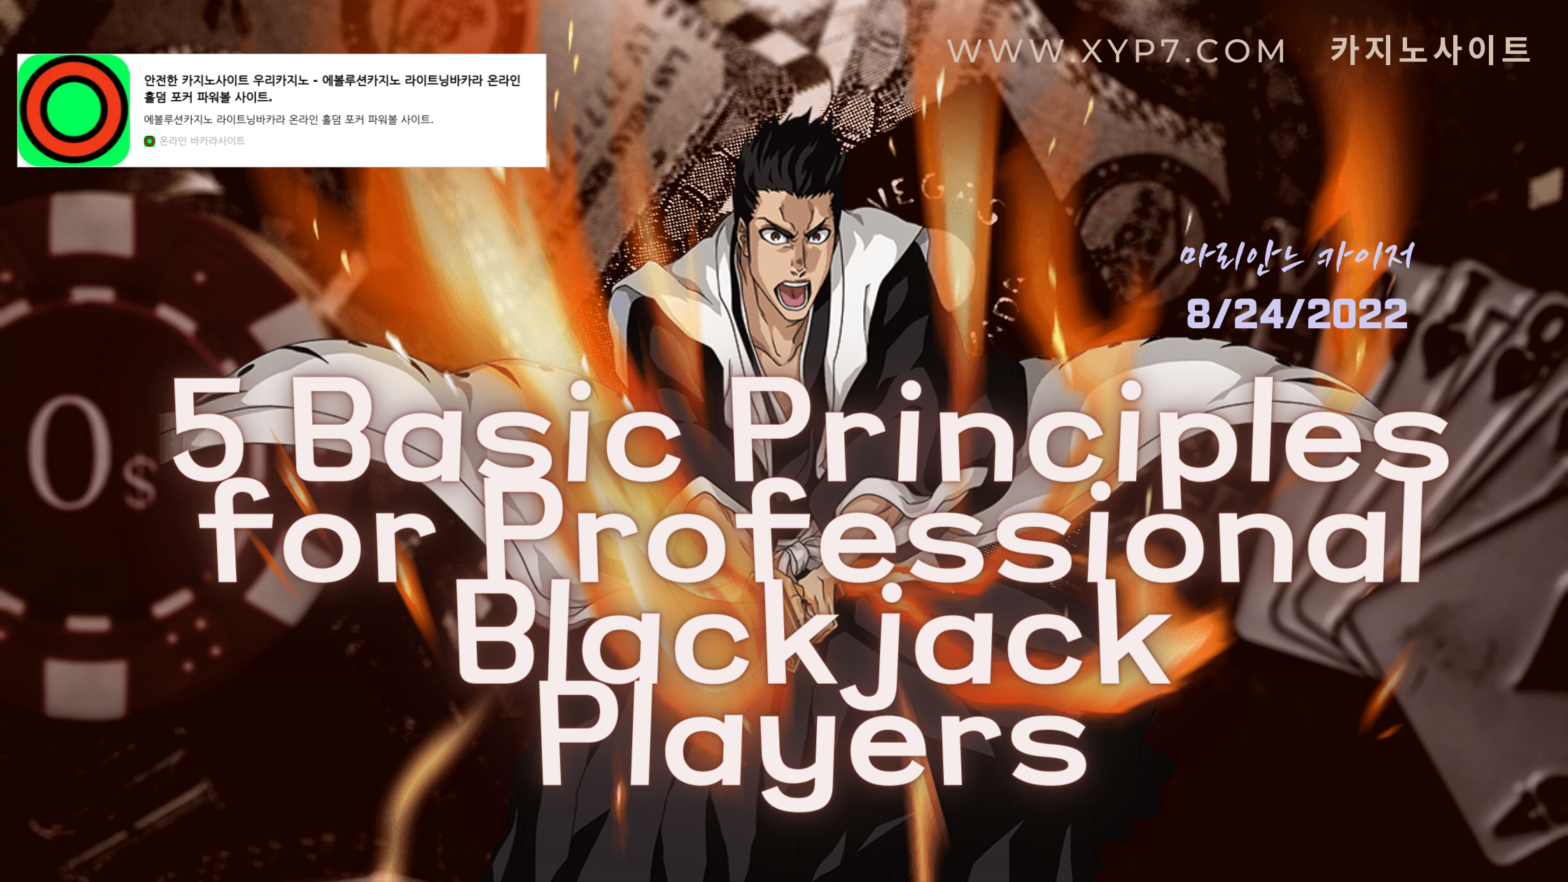 5 Basic Principles for Professional Blackjack Players